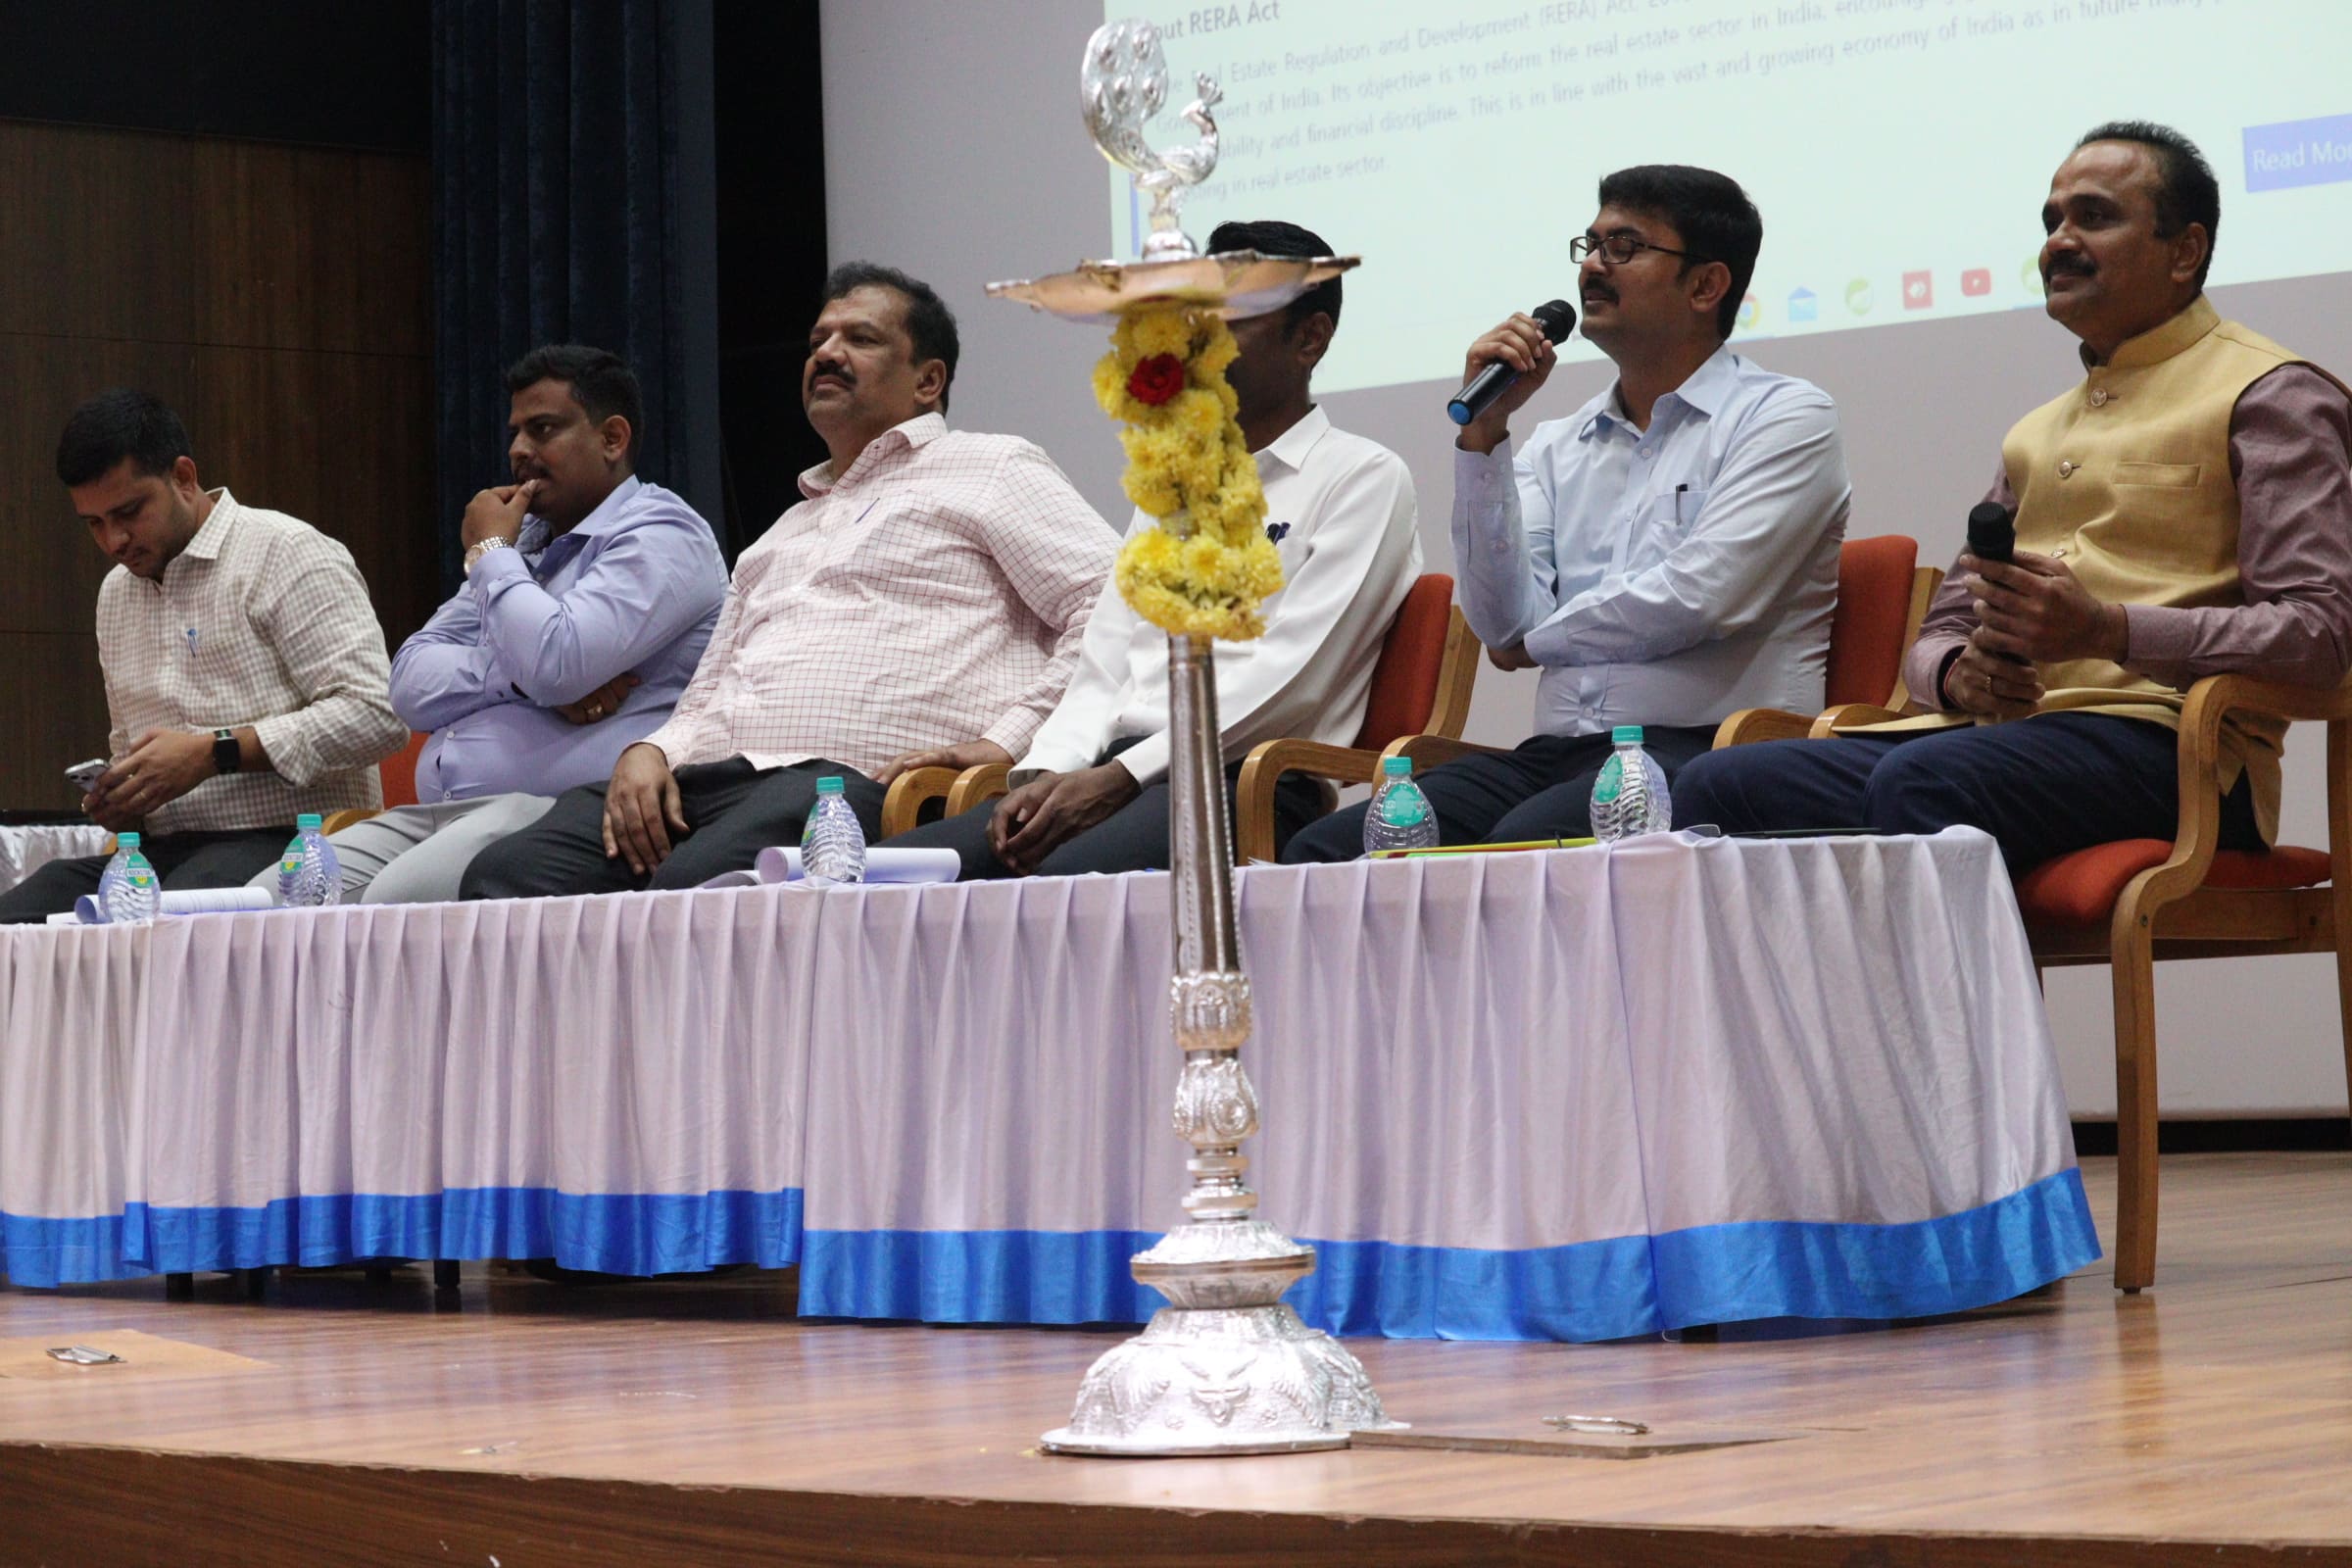 Workshop on RERA AWARENESS was organized in Mysore on 21/10/2022